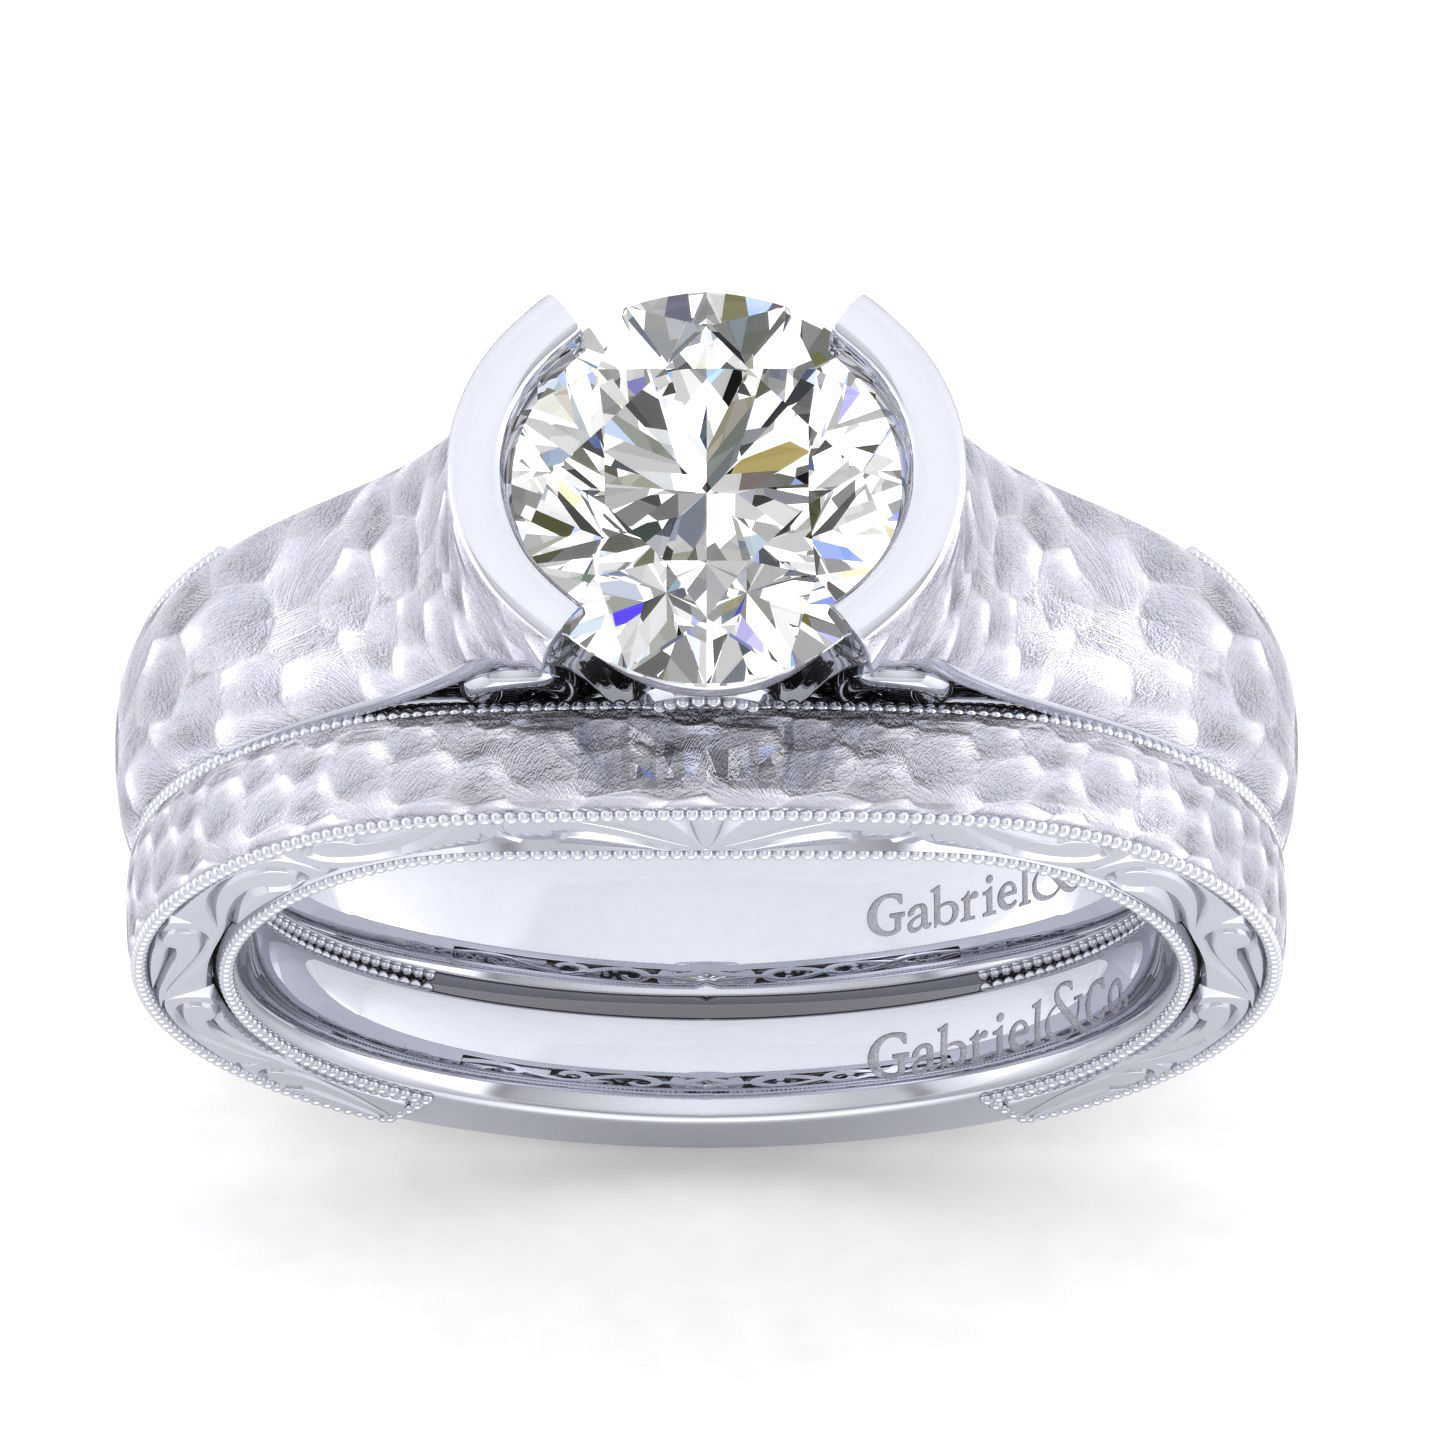 Vintage Inspired Platinum Round Diamond Engagement Ring